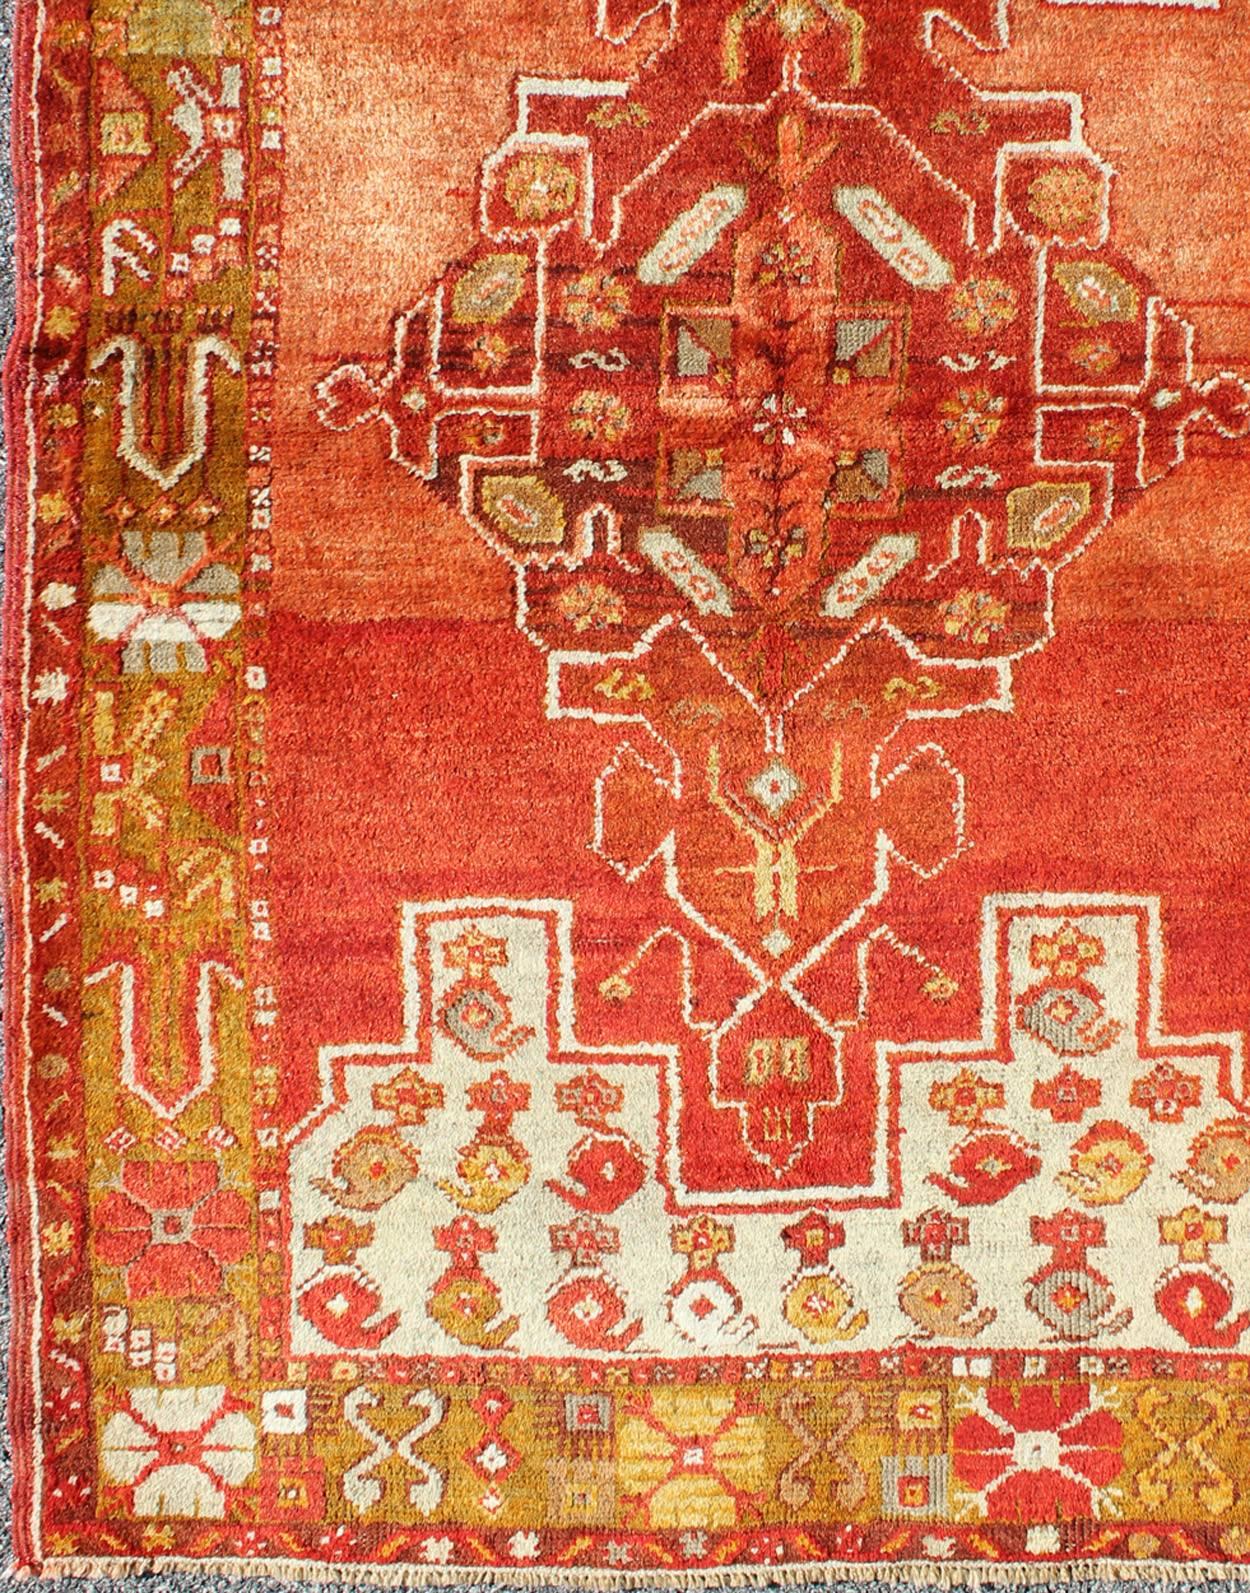  Colorful Antique Turkish Oushak with Red, Rose, Ivory, Yellow-Green & Yellow

 Turkish antique Oushak small carpet with unique design and colors. Keivan Woven Arts/ rug/tu-emd-95038. origin/turkey. Antique Oushak  

Measures: 3'6 x 5'7. 

This